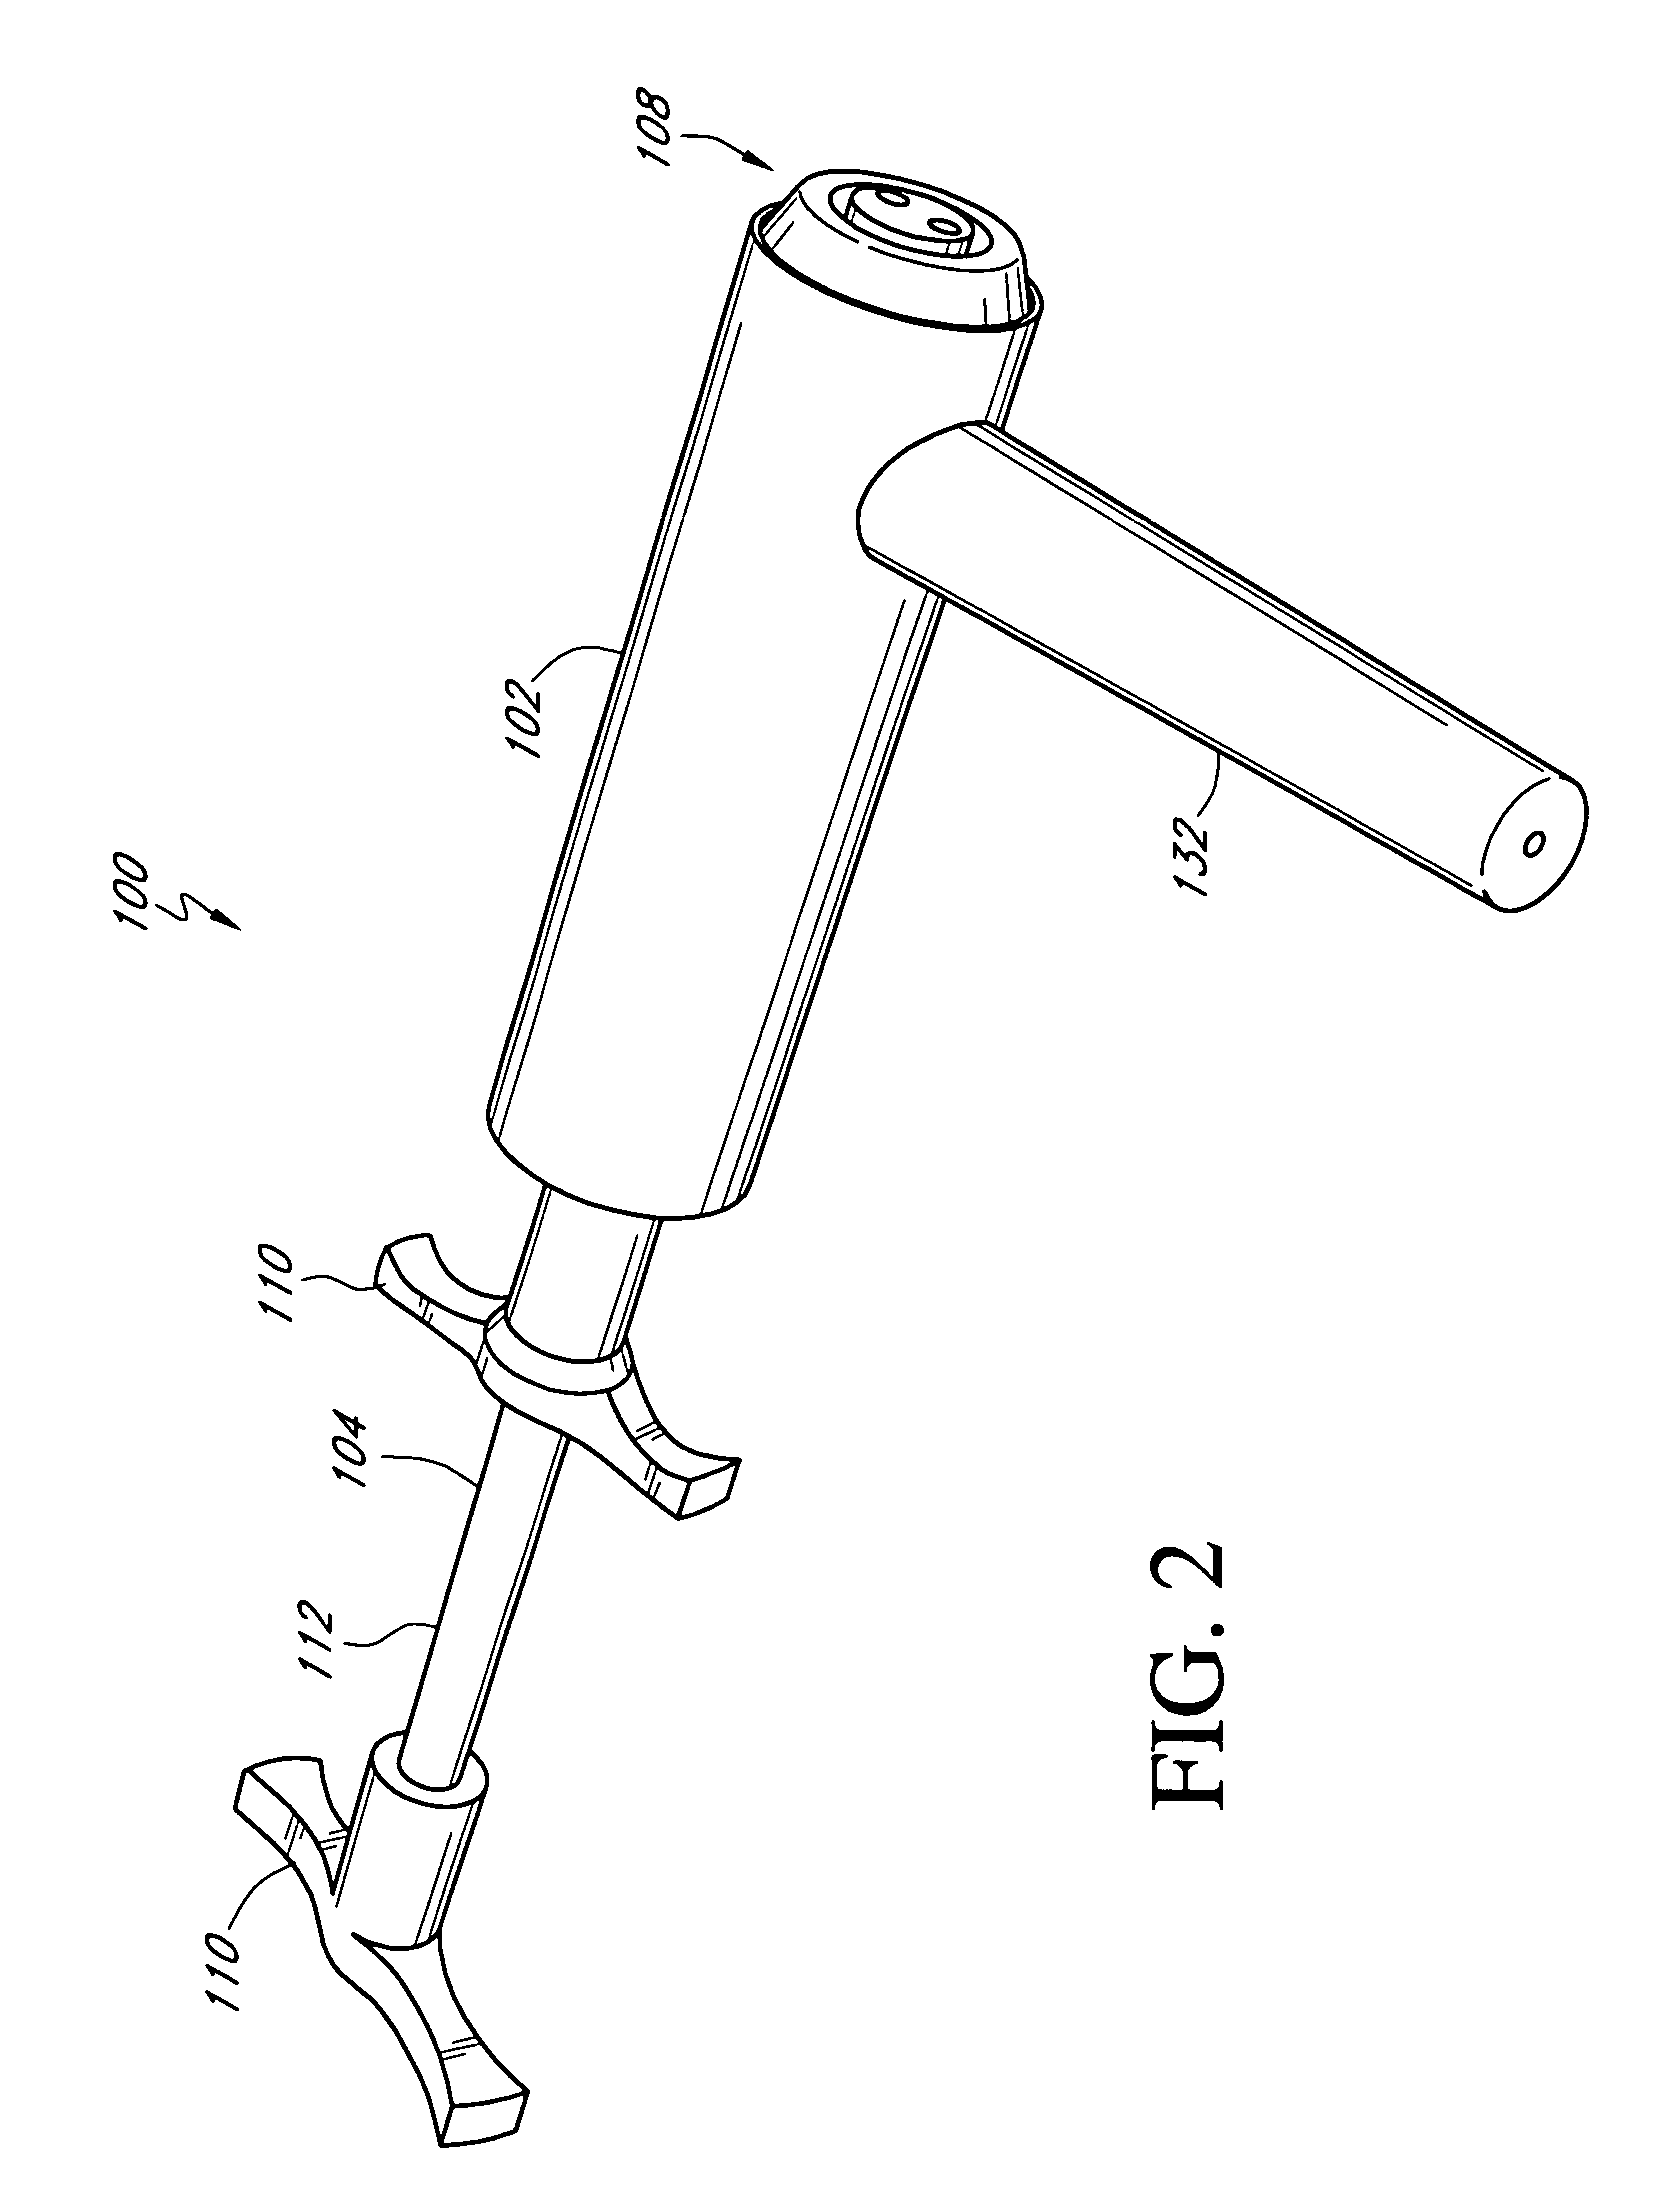 Combination cork extractor and vacuum sealer tool